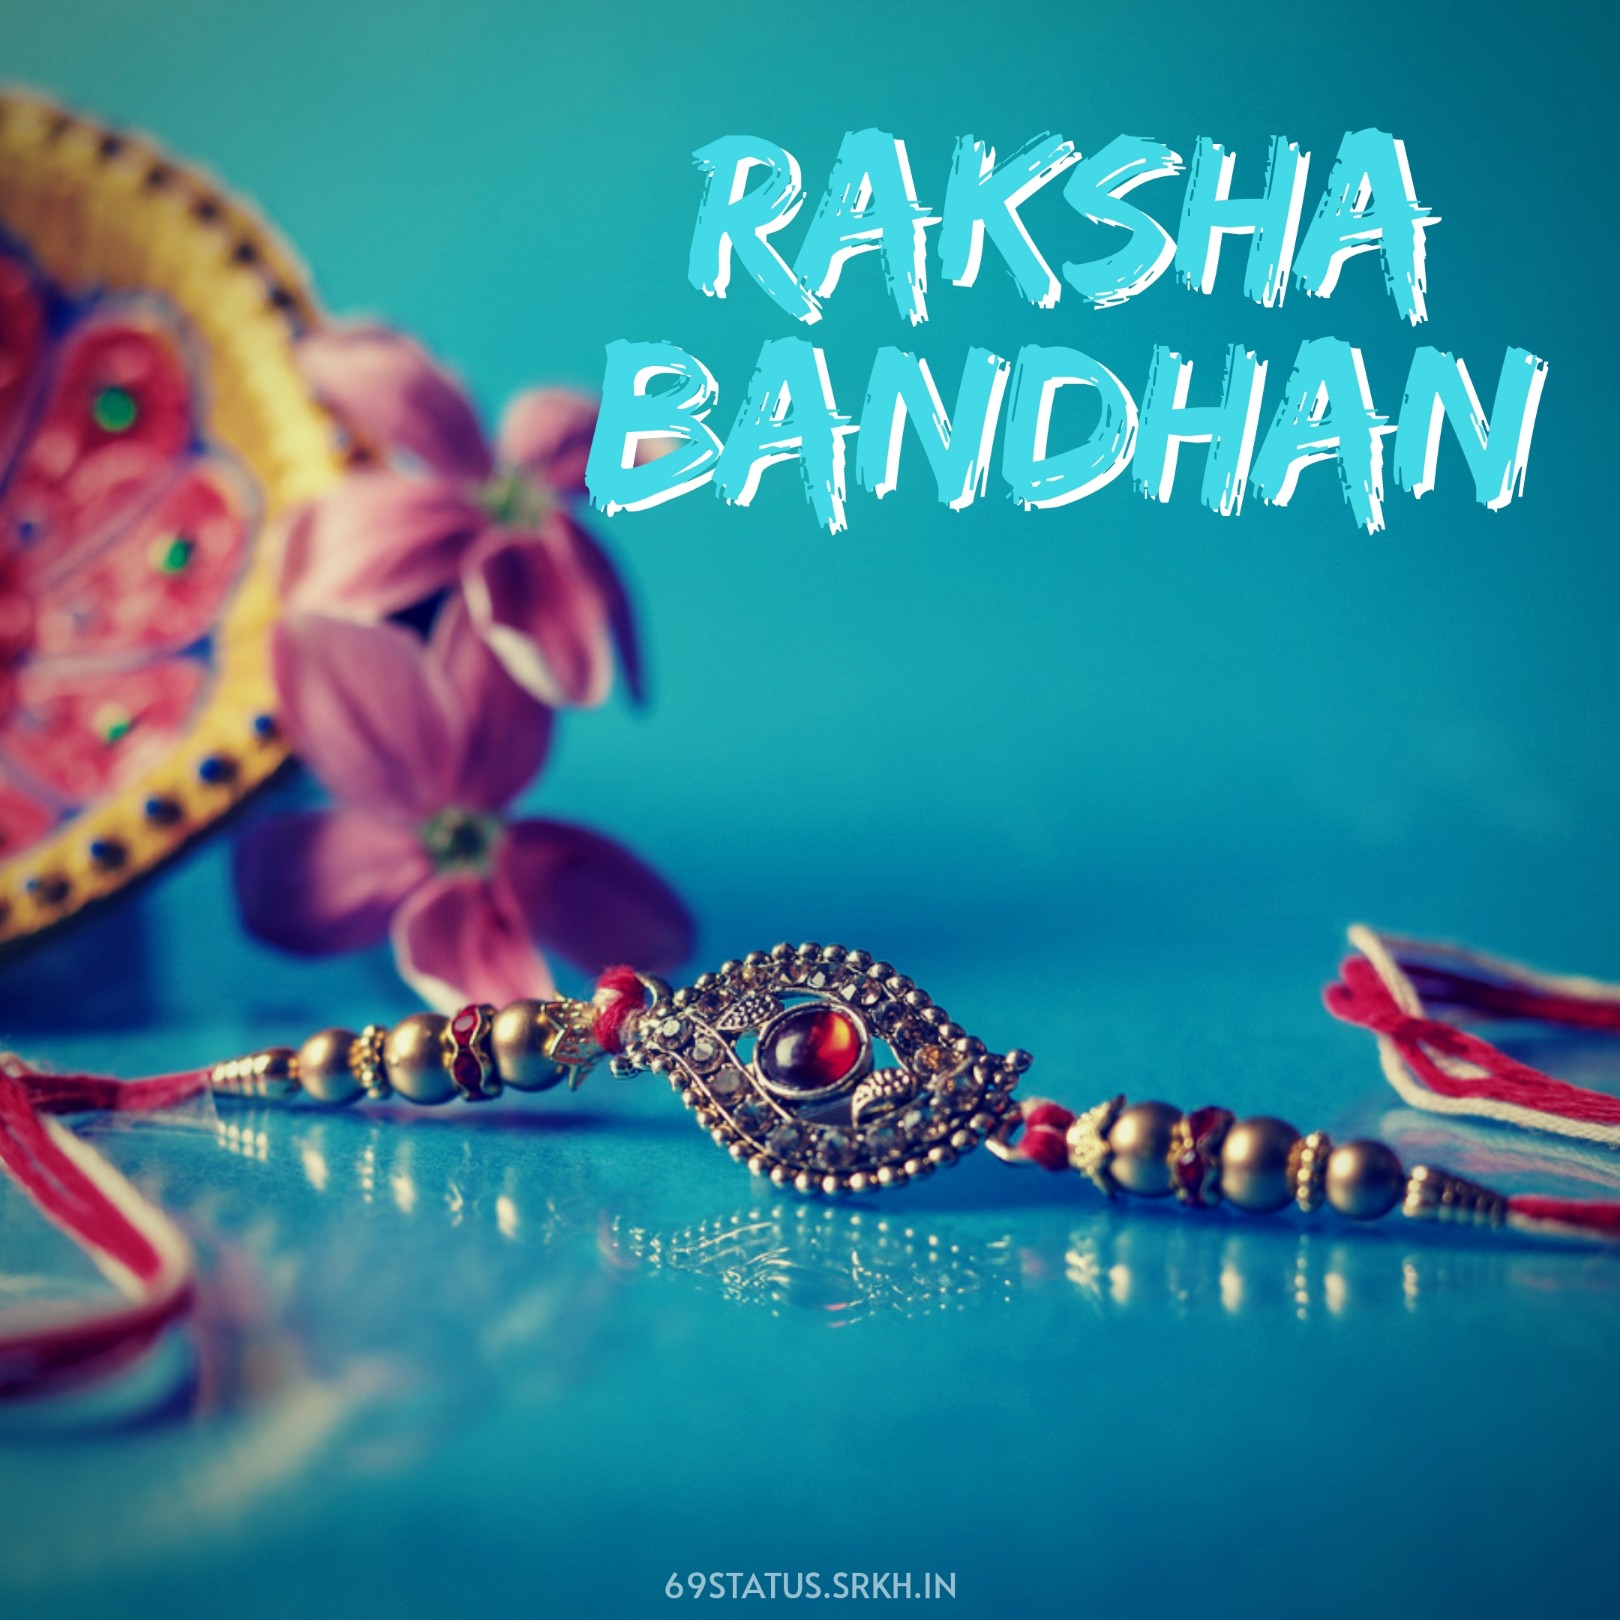 Raksha Bandhan Picture Images Facebook